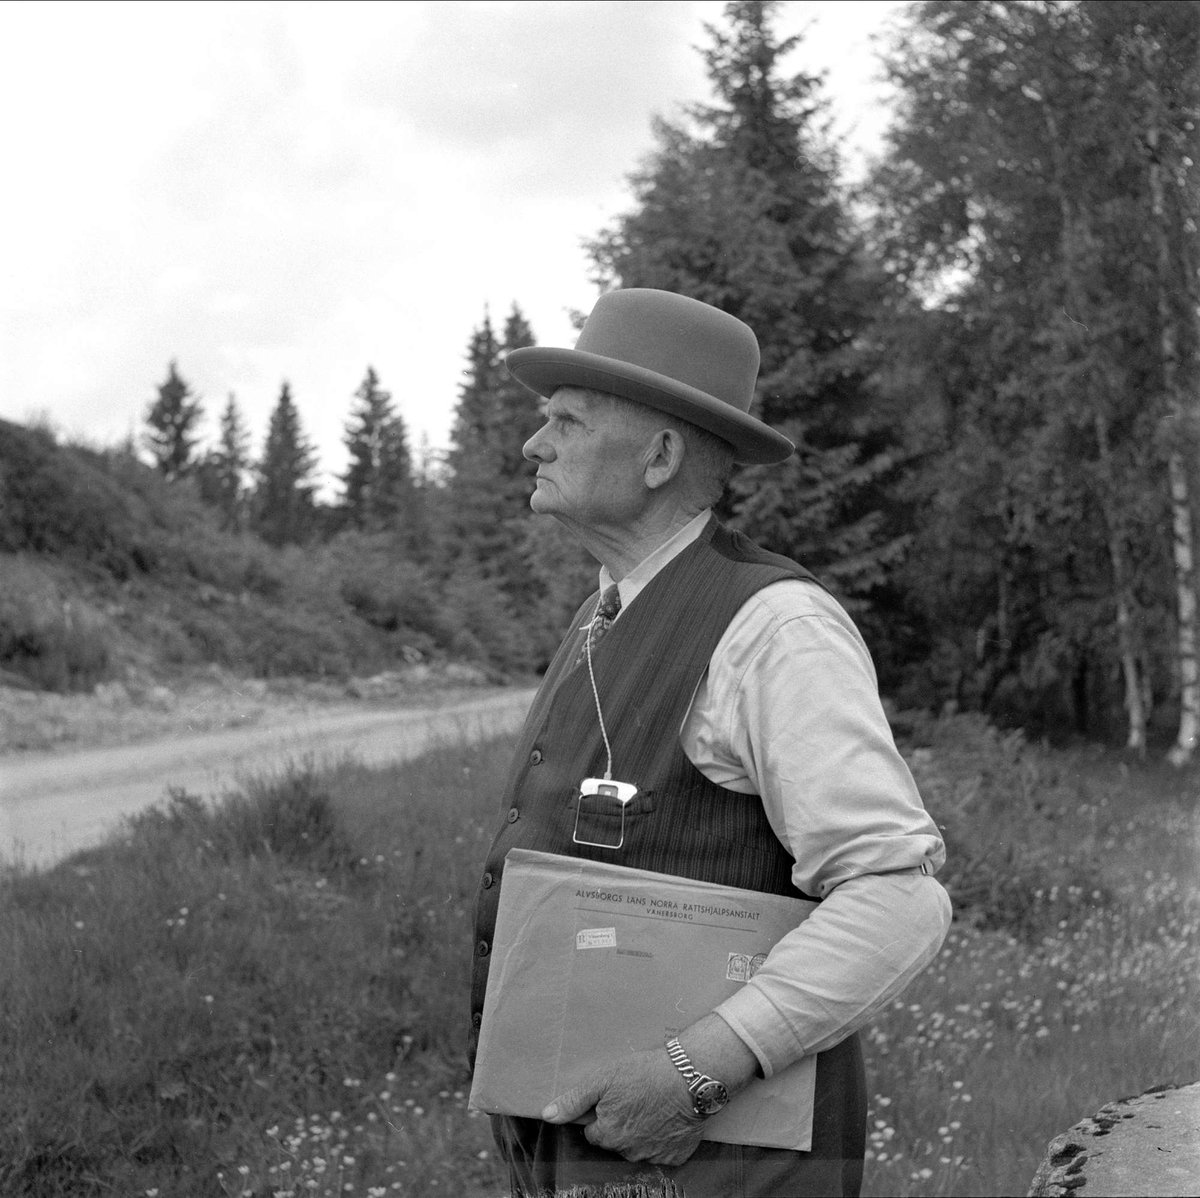 Norsk landmåling i Sverige, spesialister i arbeid, Sverige, juni 1958.